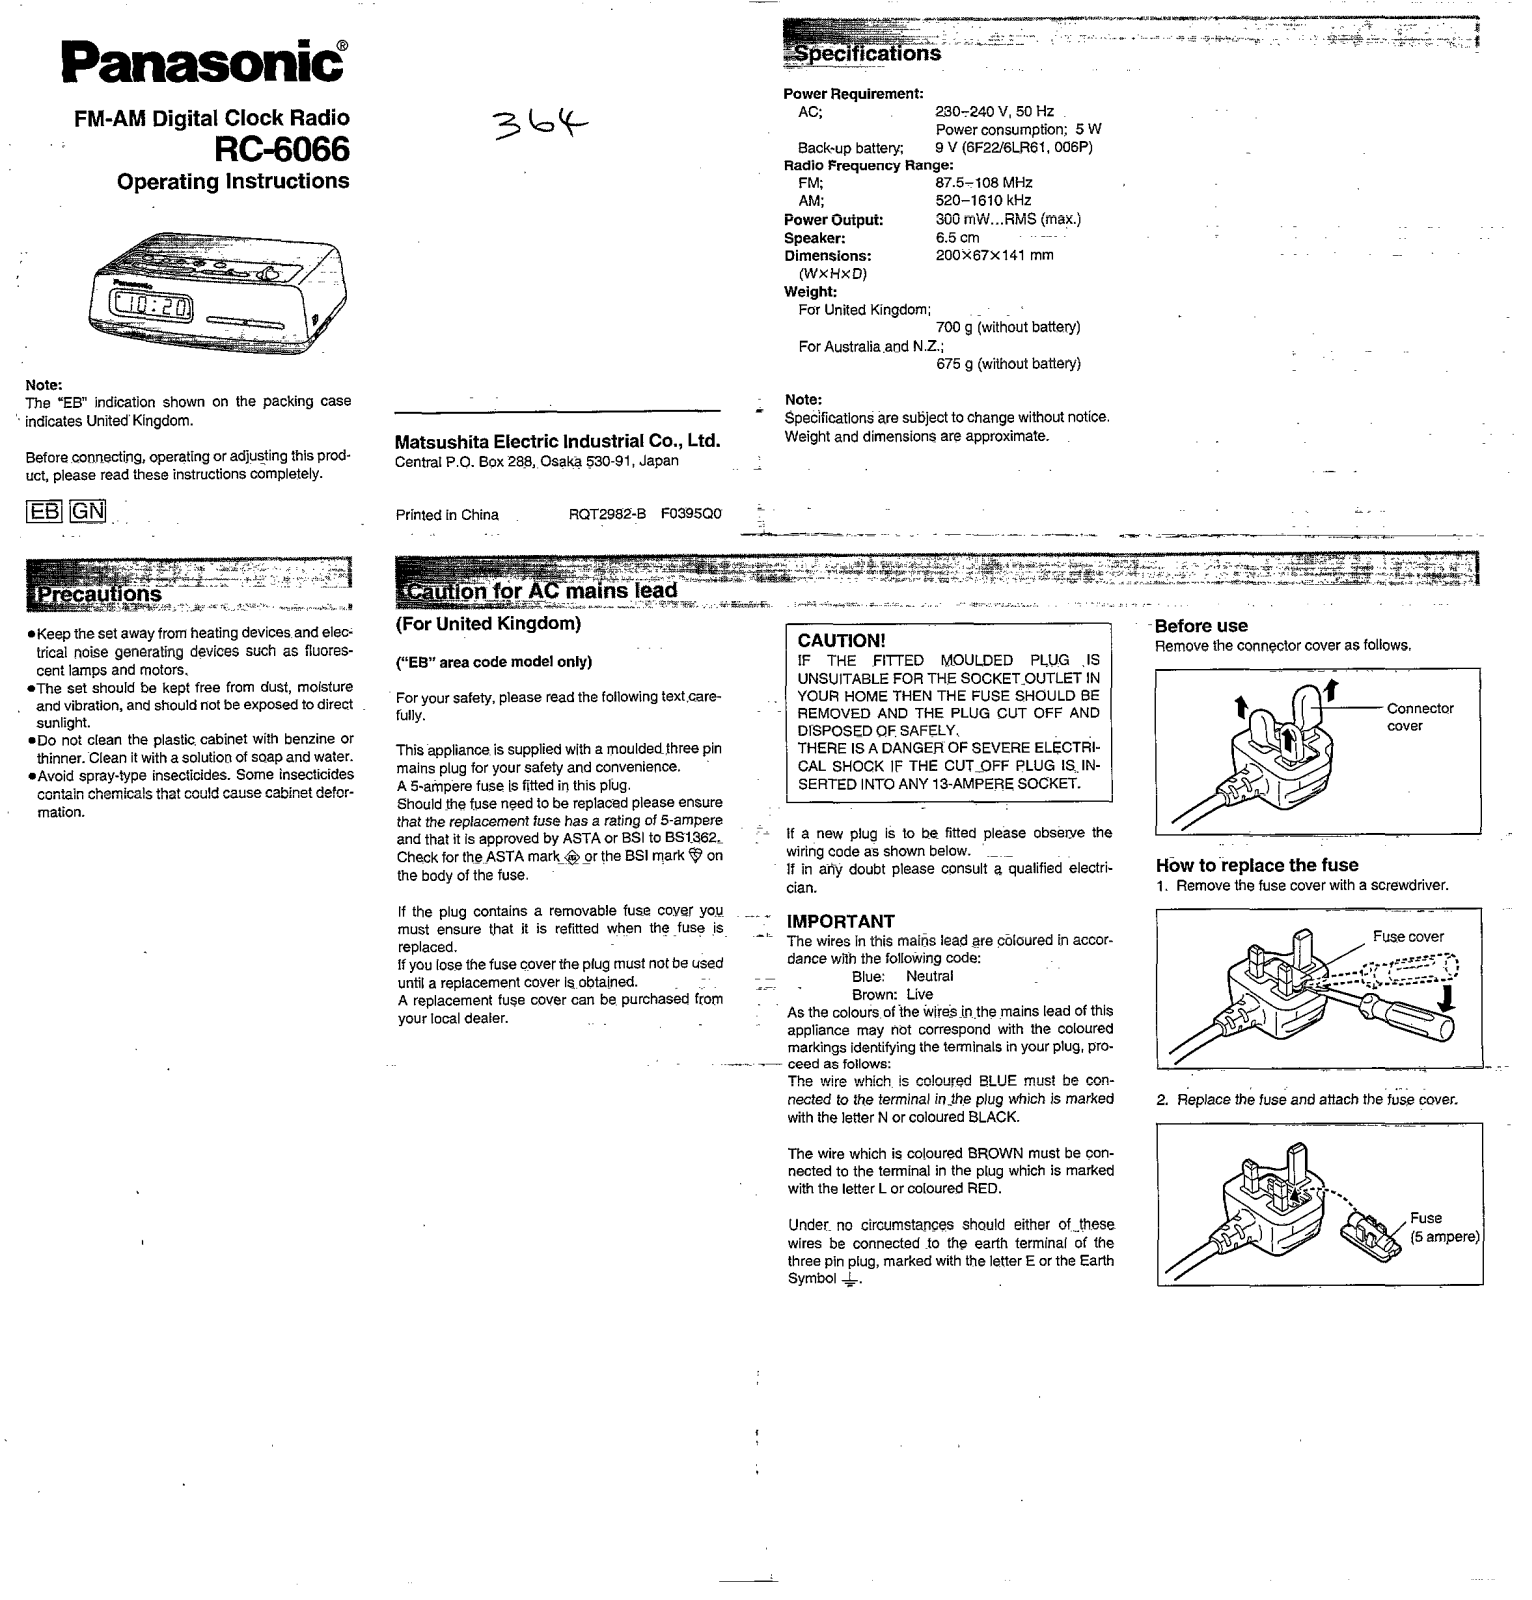 Panasonic RC-6066 User Manual